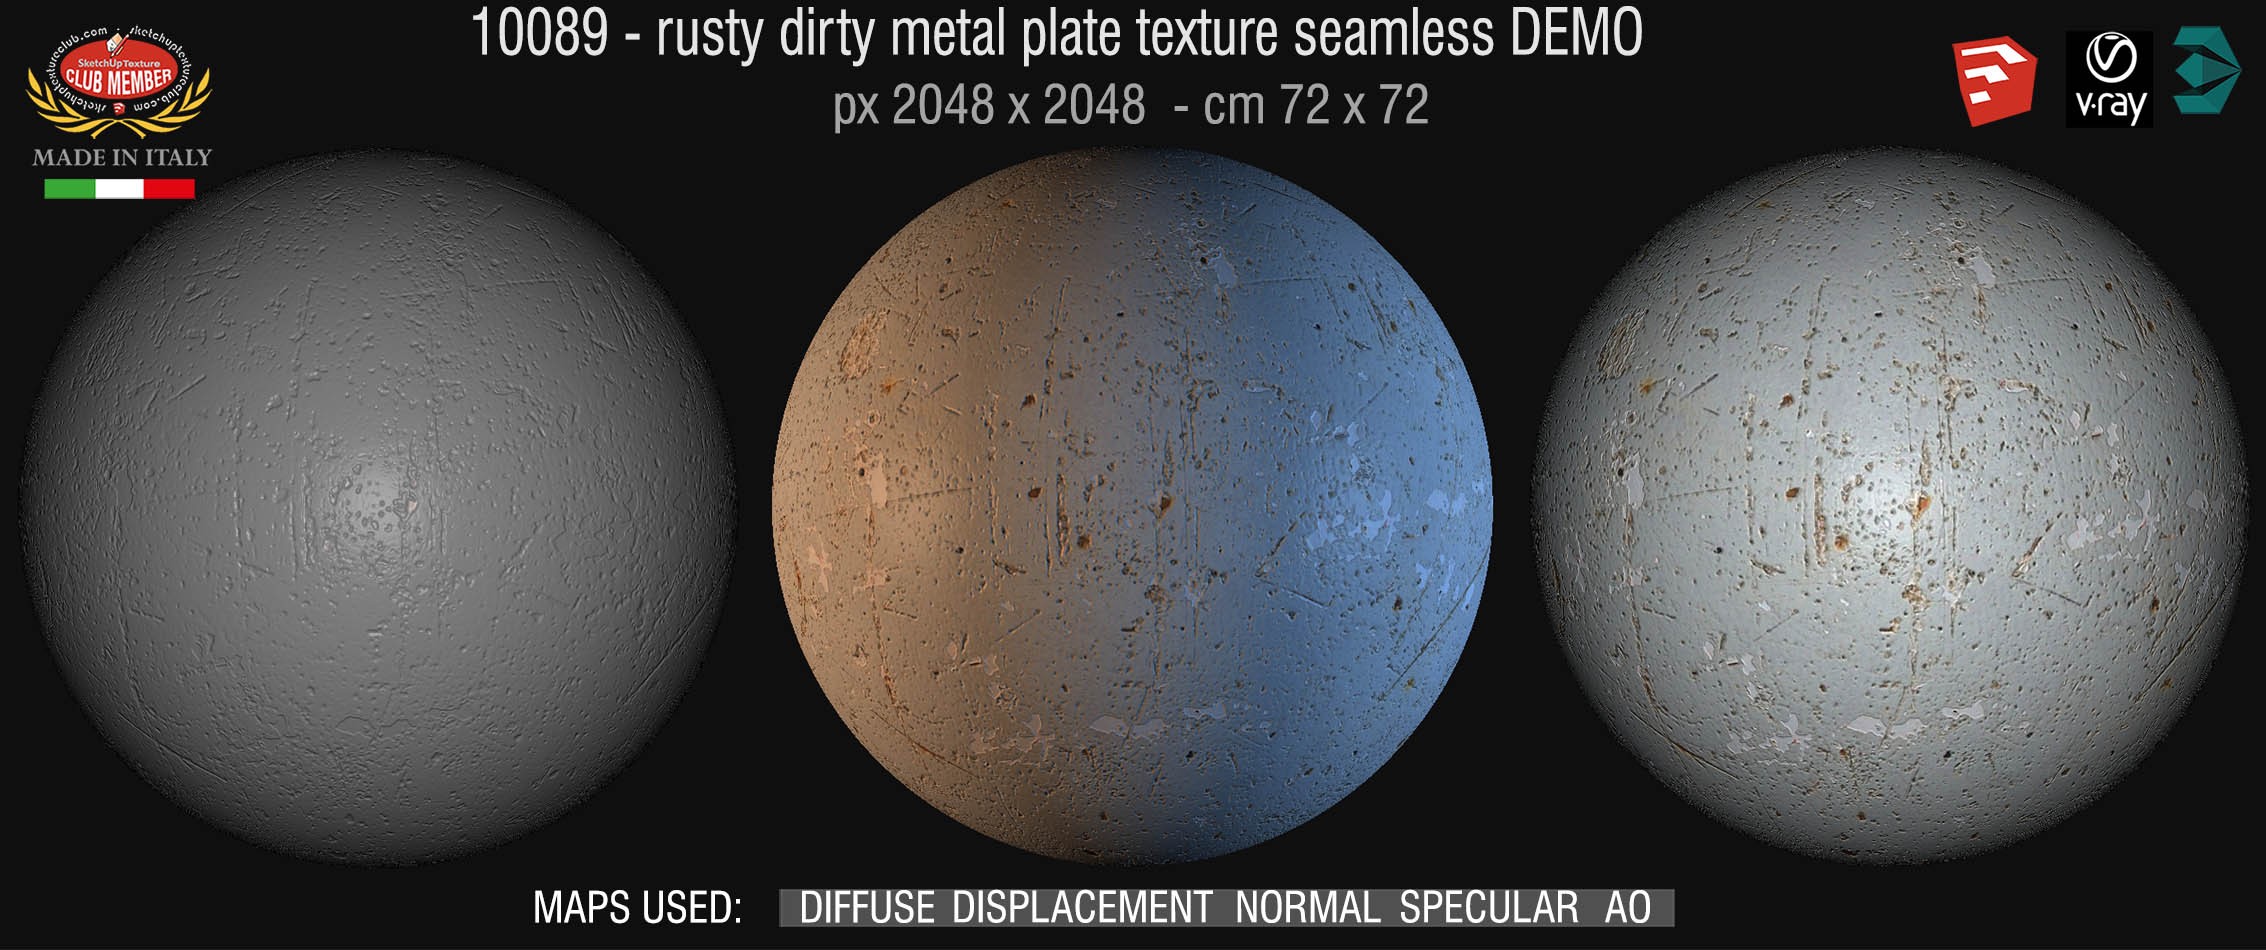 10089 HR Rusty dirty metal texture seamless + maps DEMO